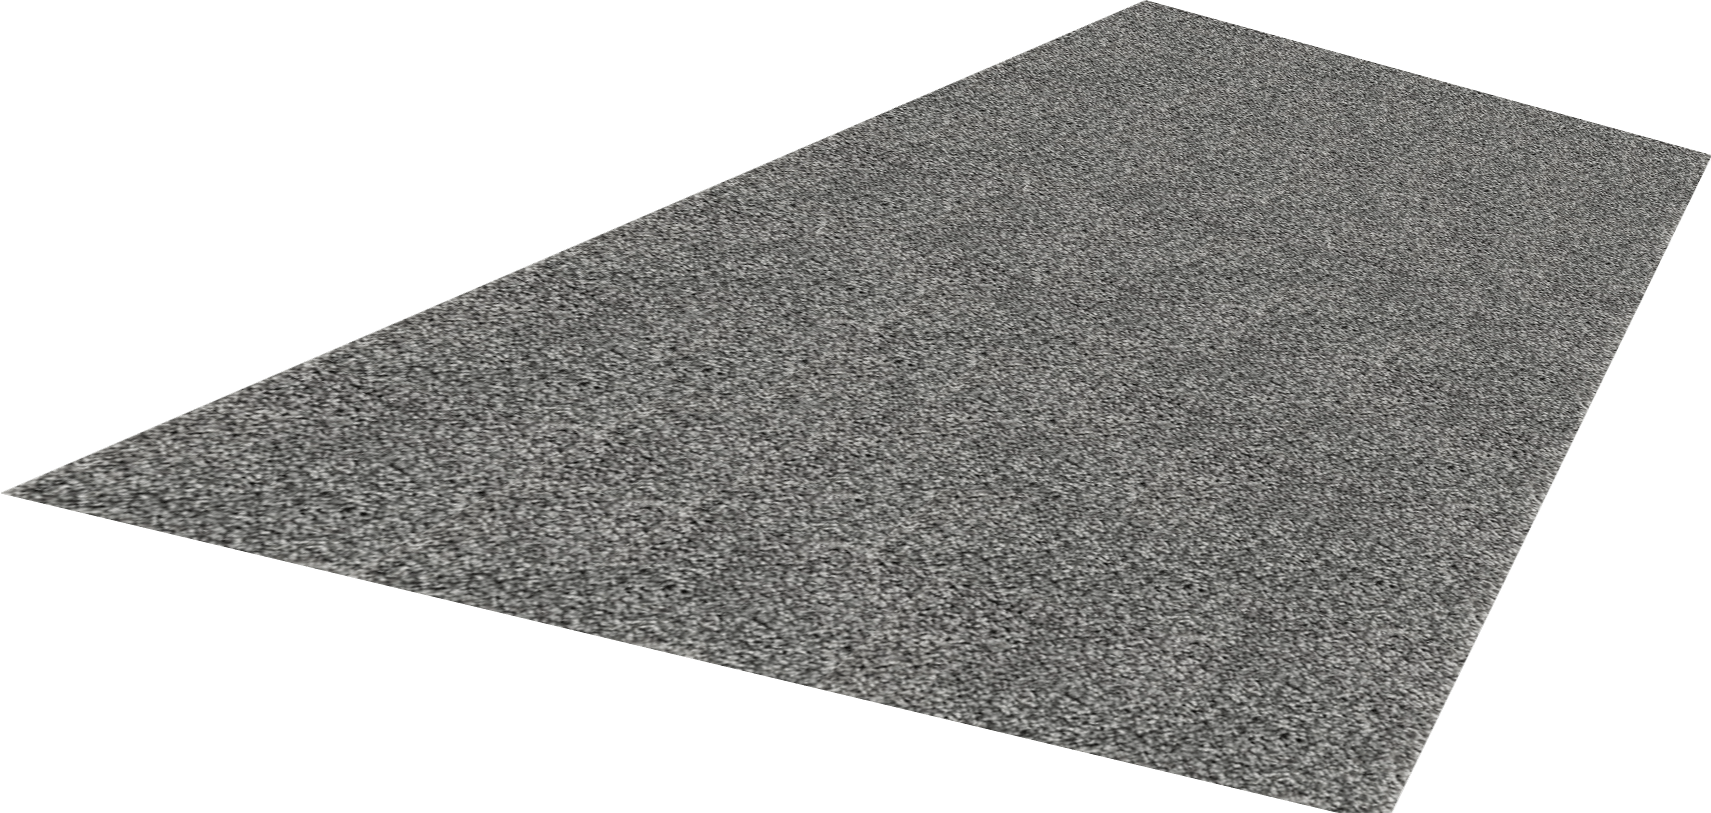 Floor with a gray carpet design